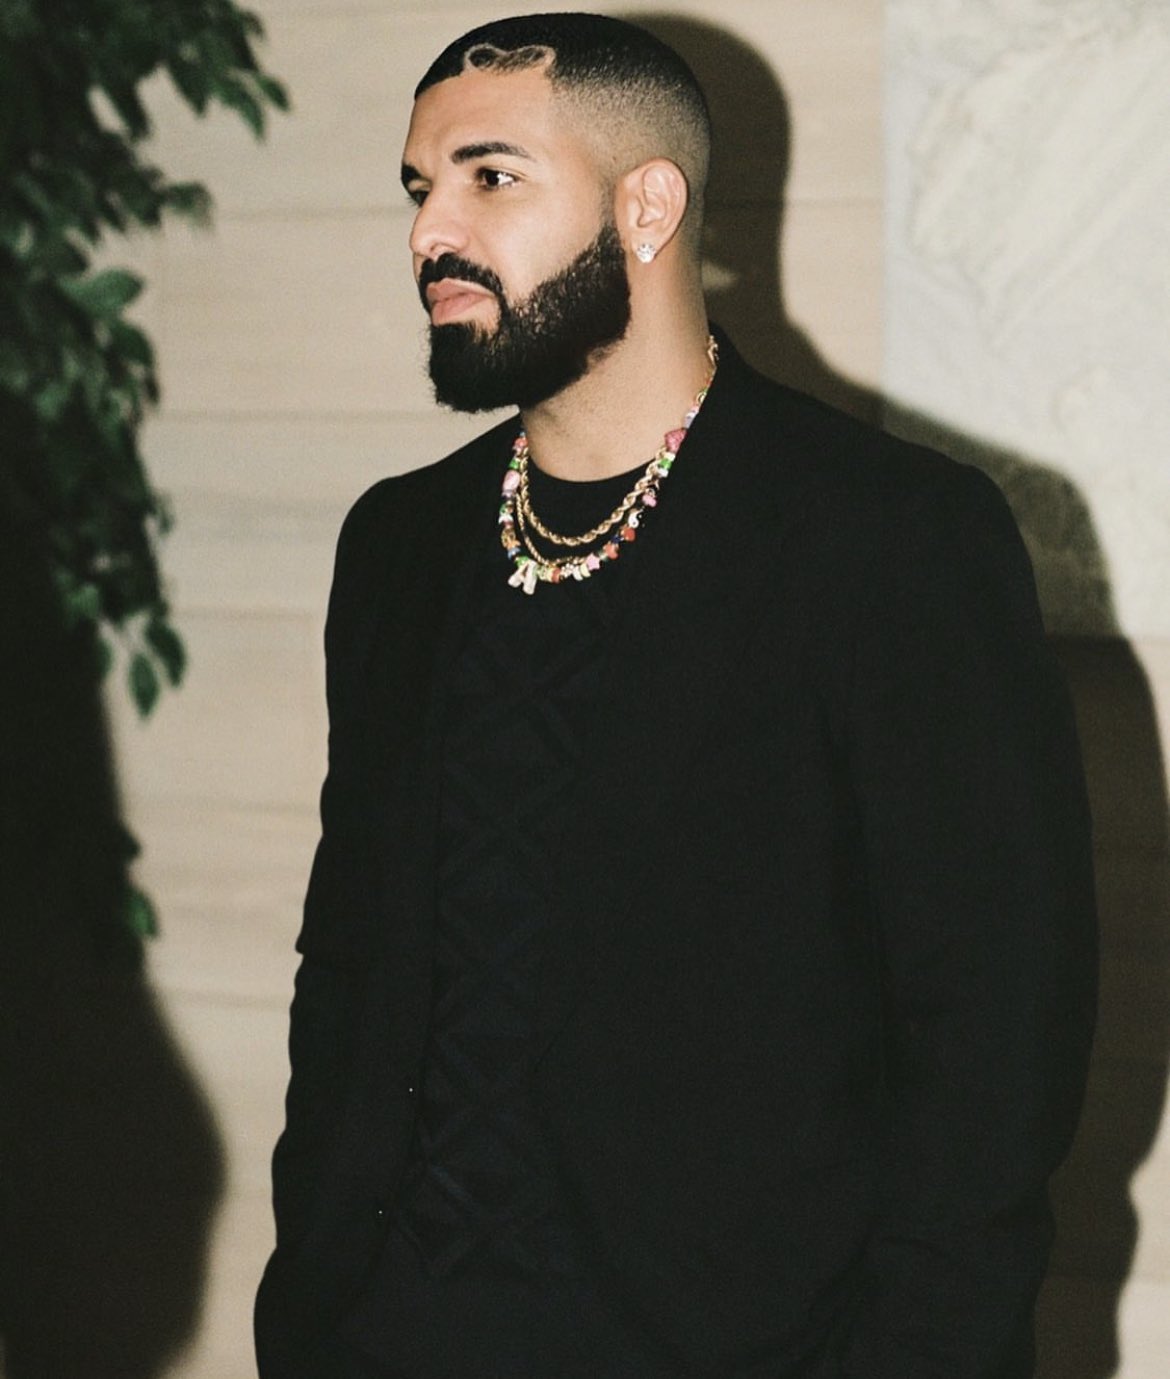 Drake denies lady claims